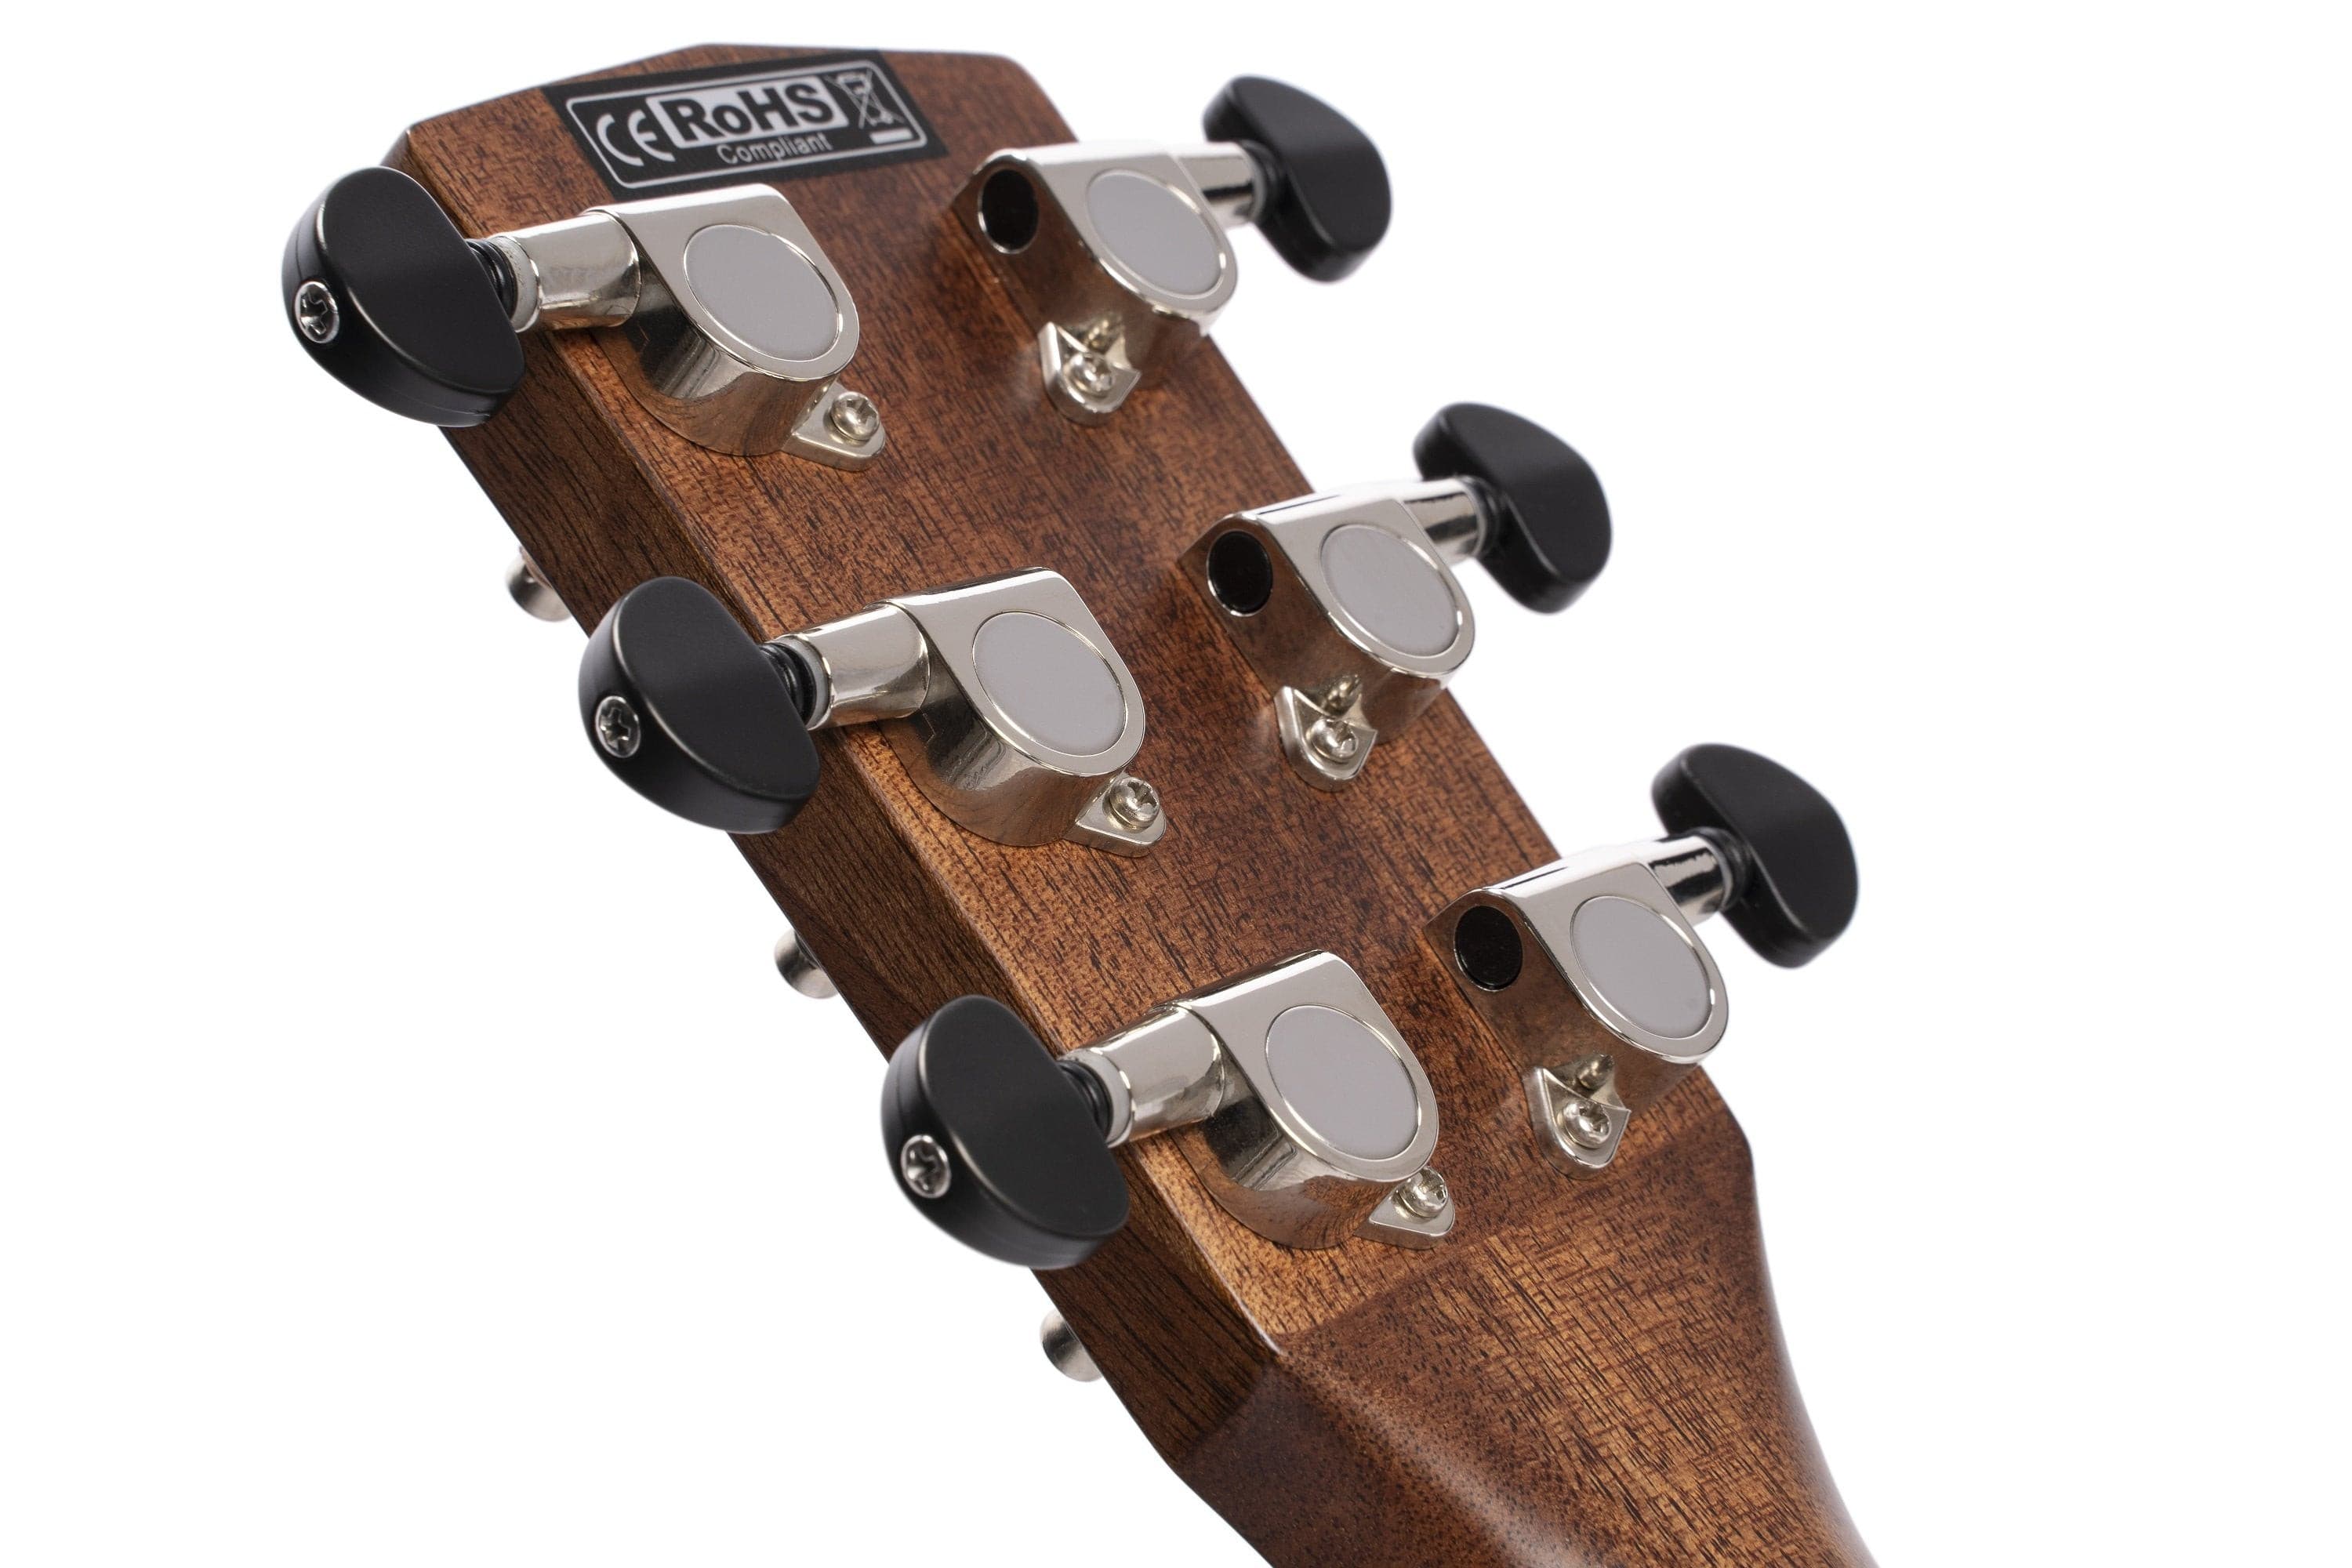 Cort Earth Mini Electro Adirondack Open Pore w/bag, Acoustic Guitar for sale at Richards Guitars.